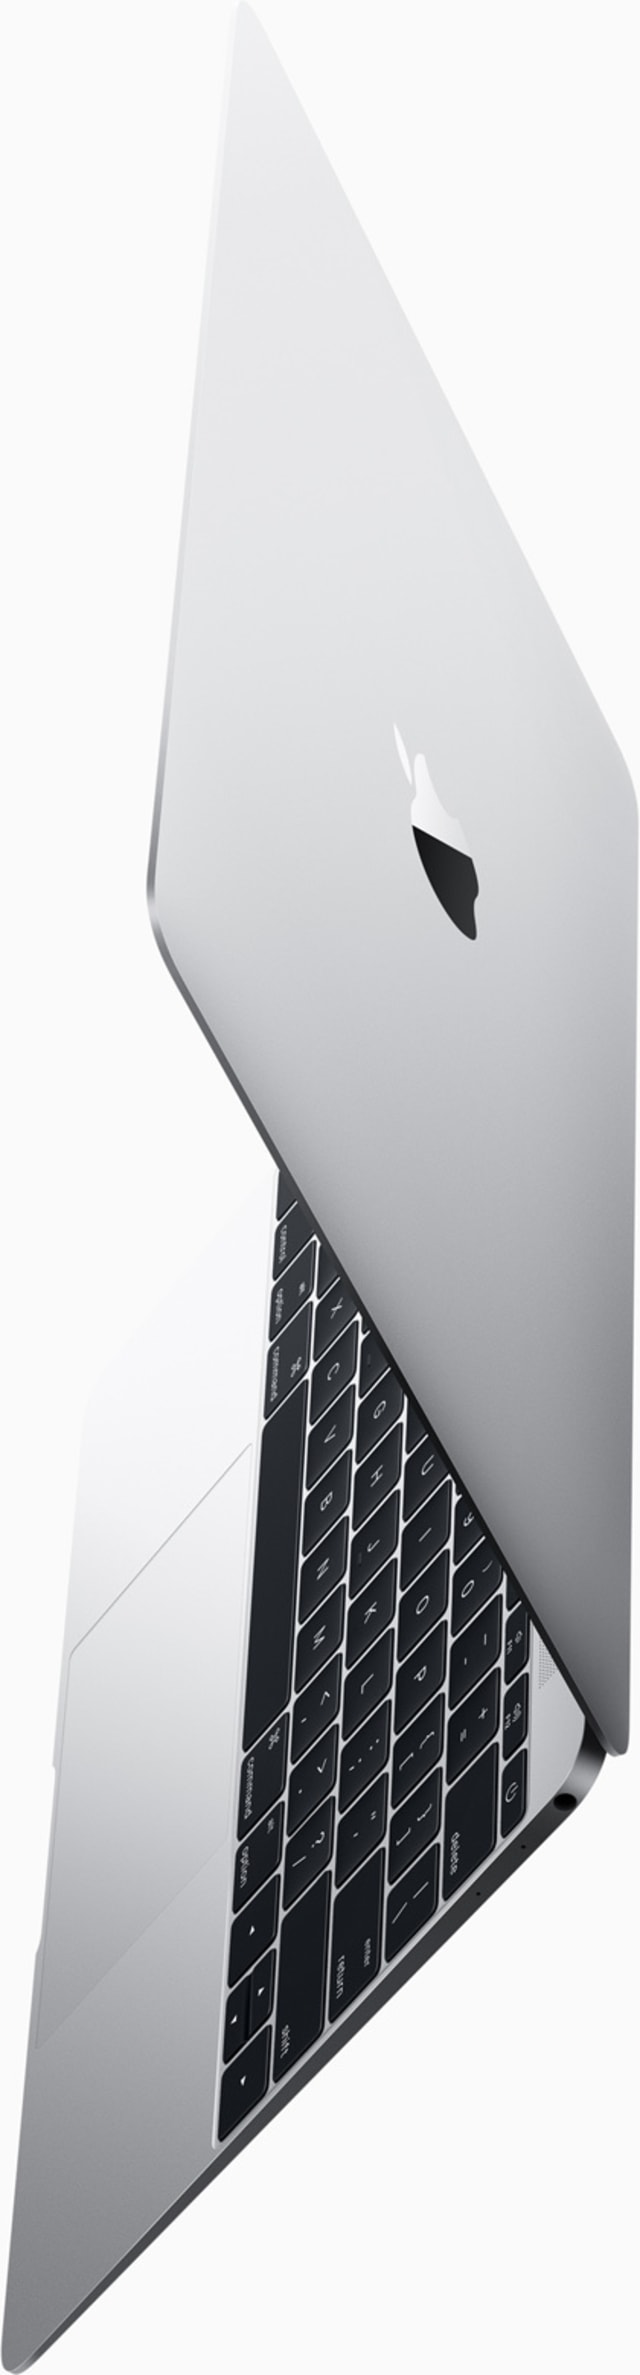 Apple Macbook (early 2016)